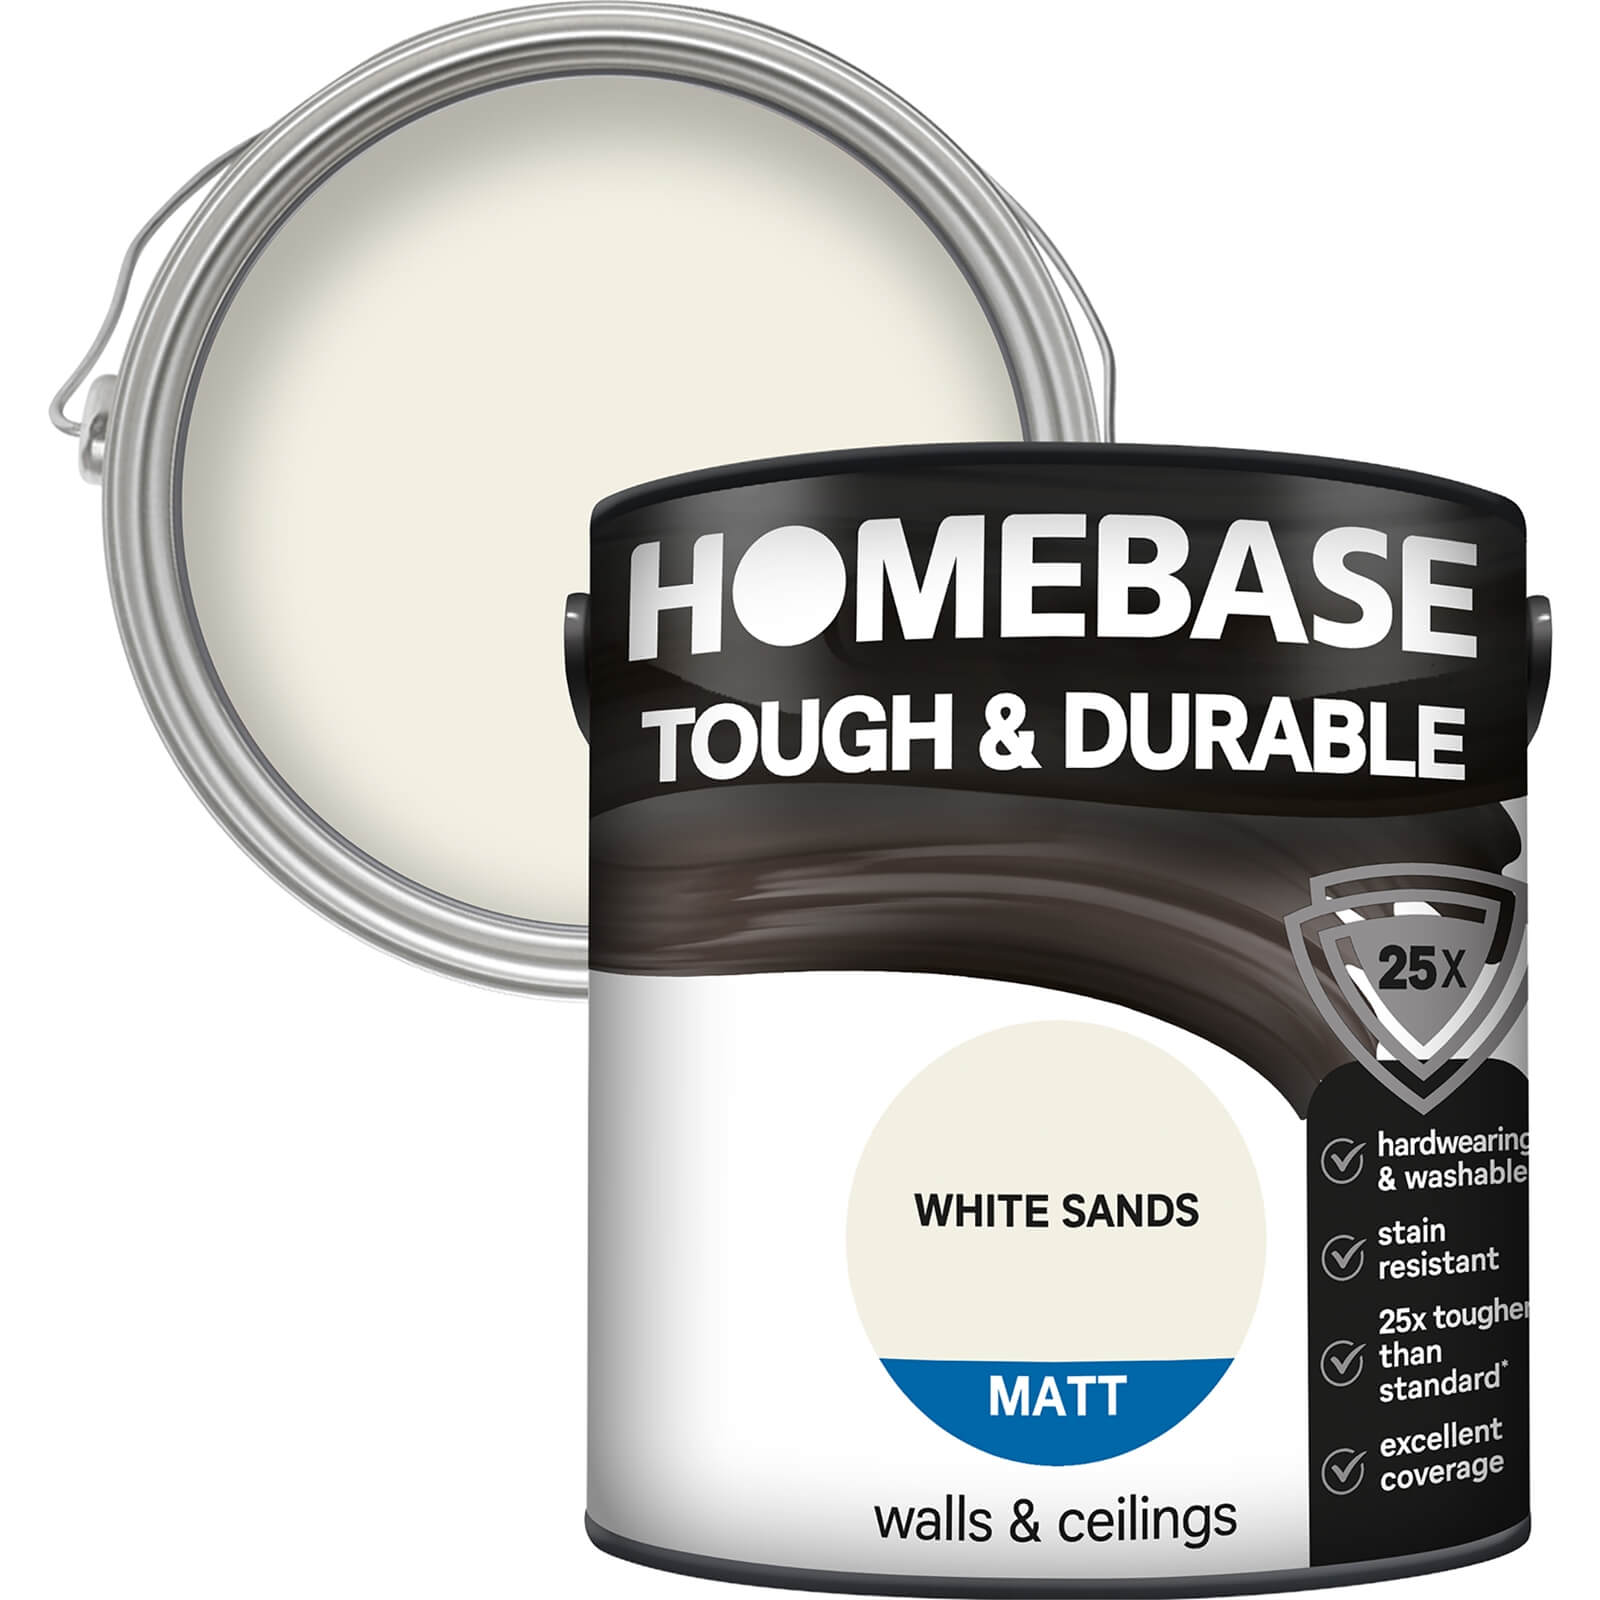 Homebase Tough & Durable Matt Paint White Sands - 2.5L